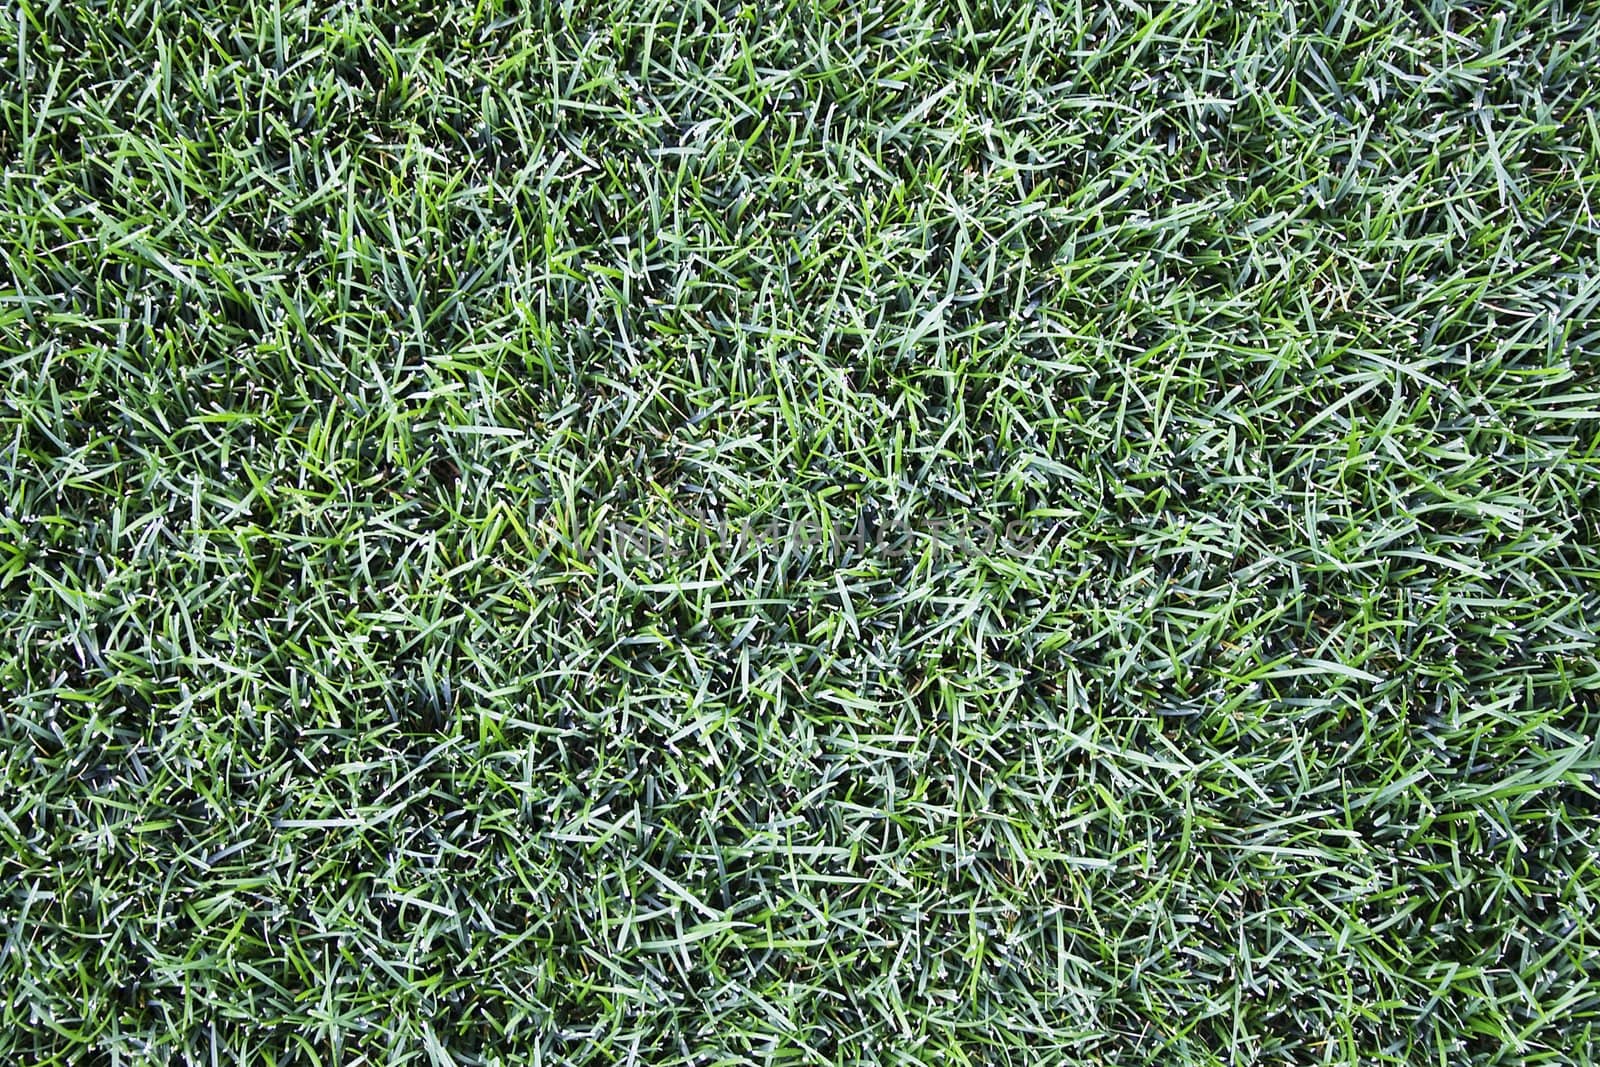 Perfectly Manicured Grass by suwanneeredhead